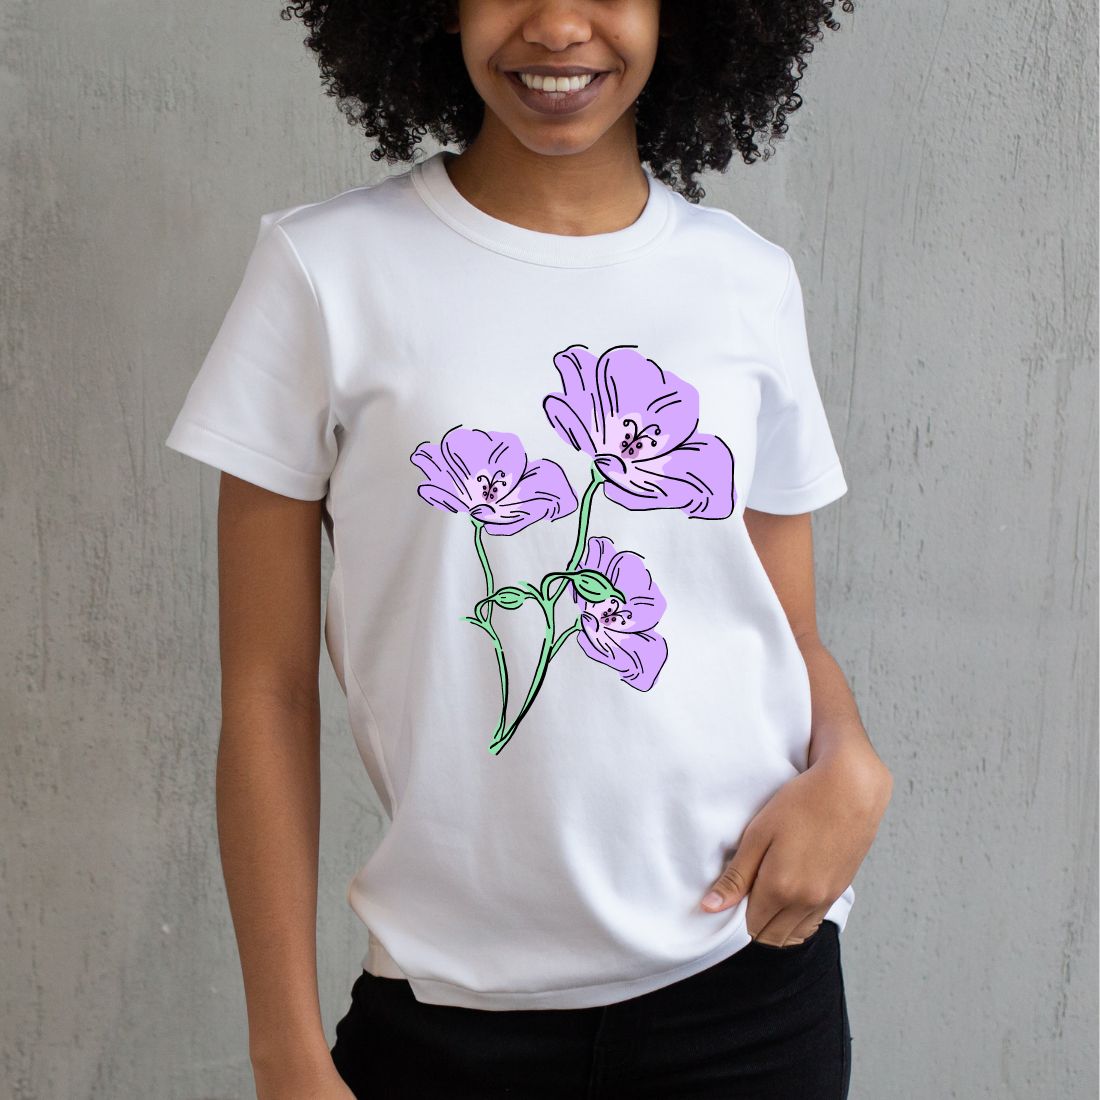 Purple flowers design t-shirt preview image.